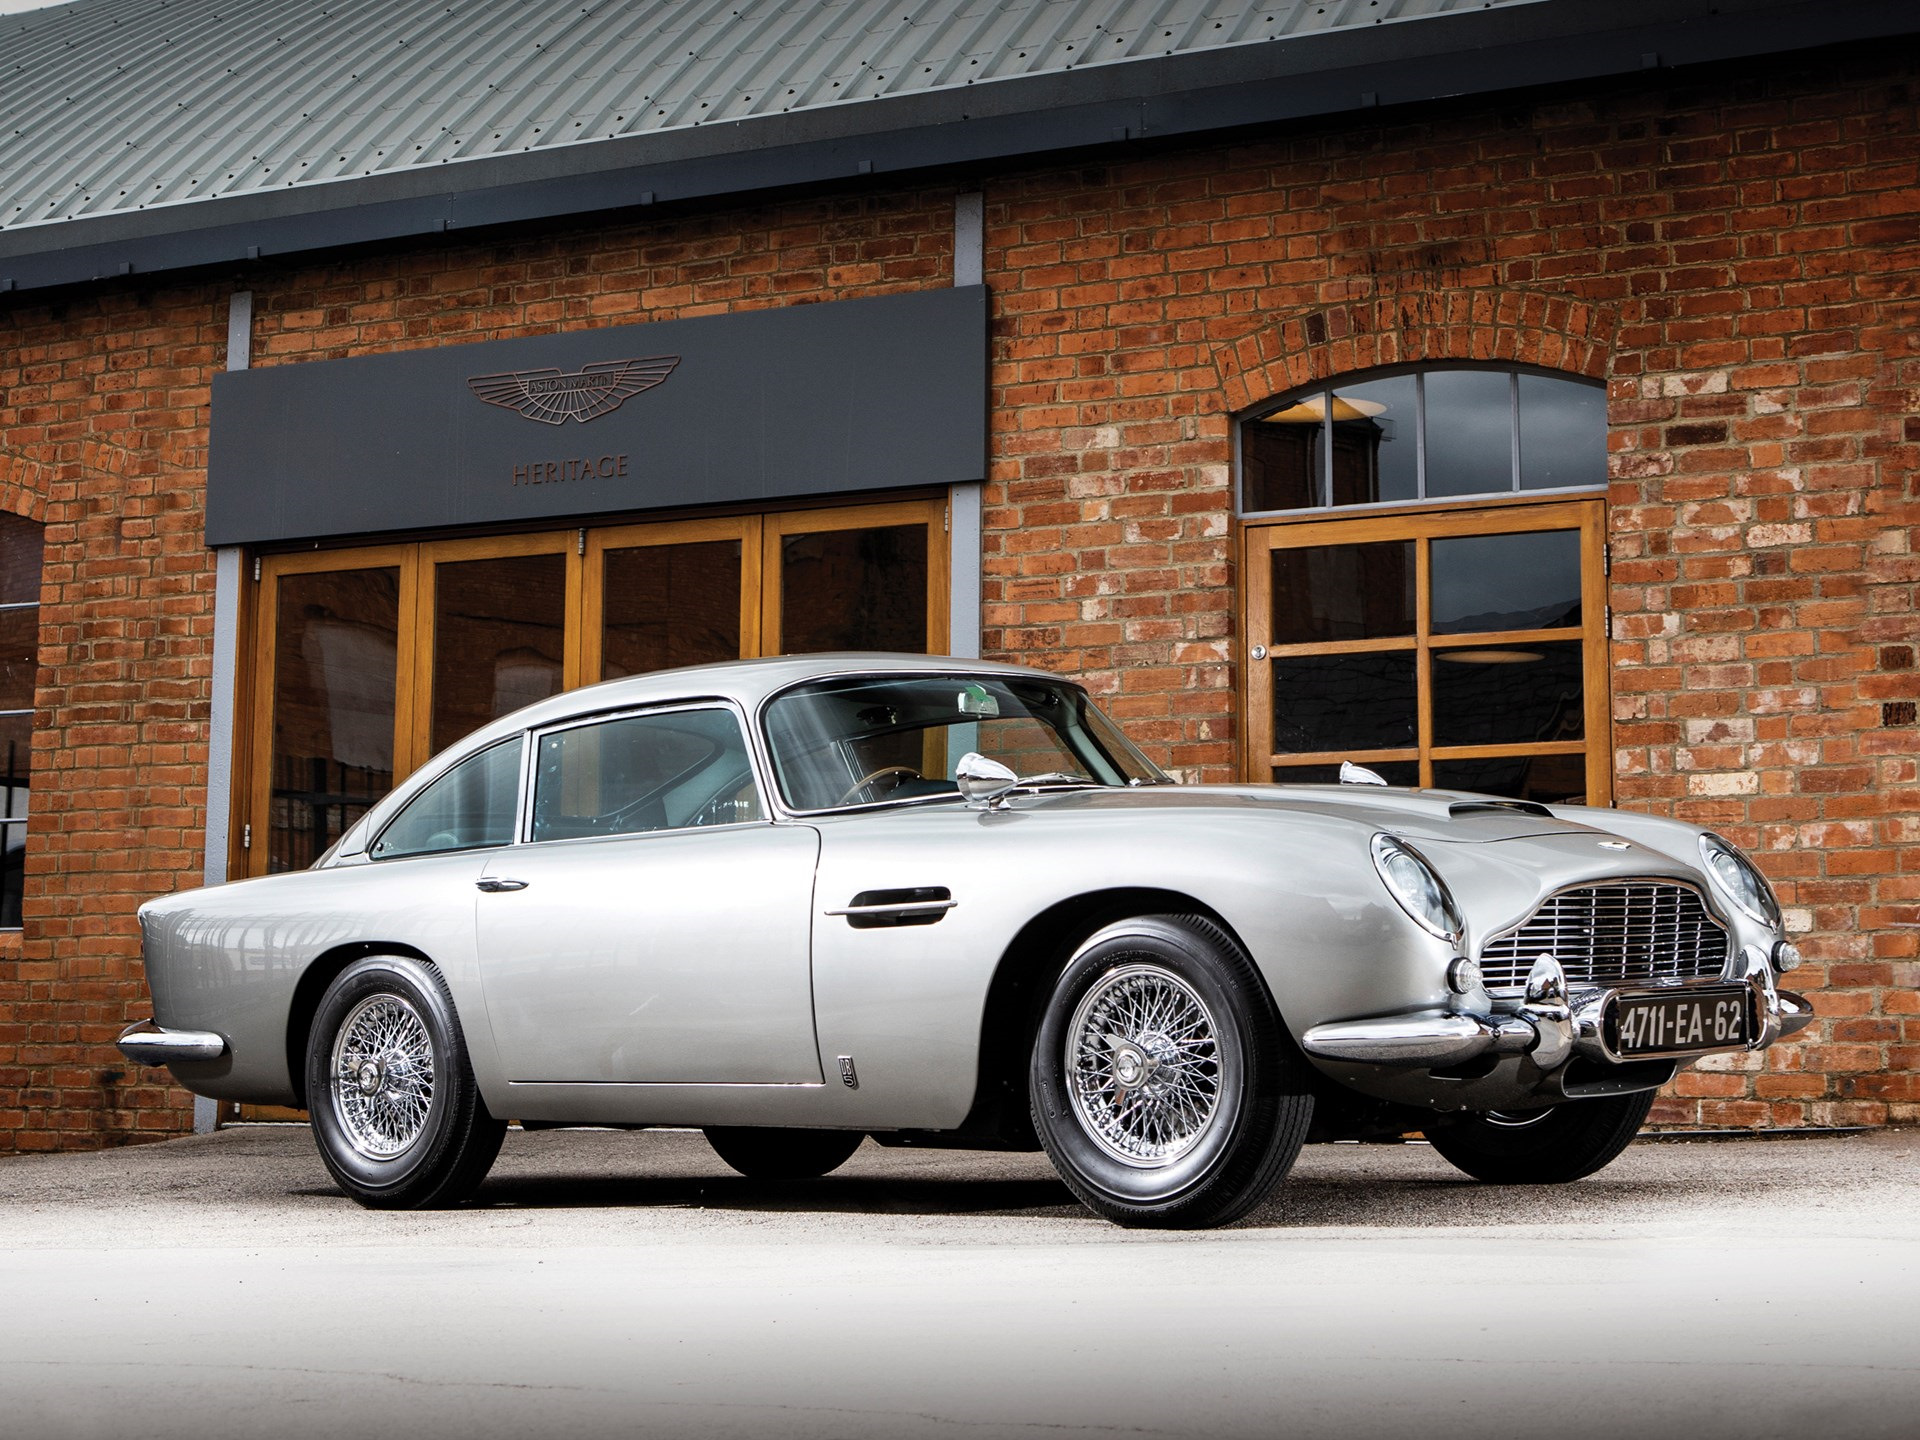 James Bond’s Aston Martin Db5